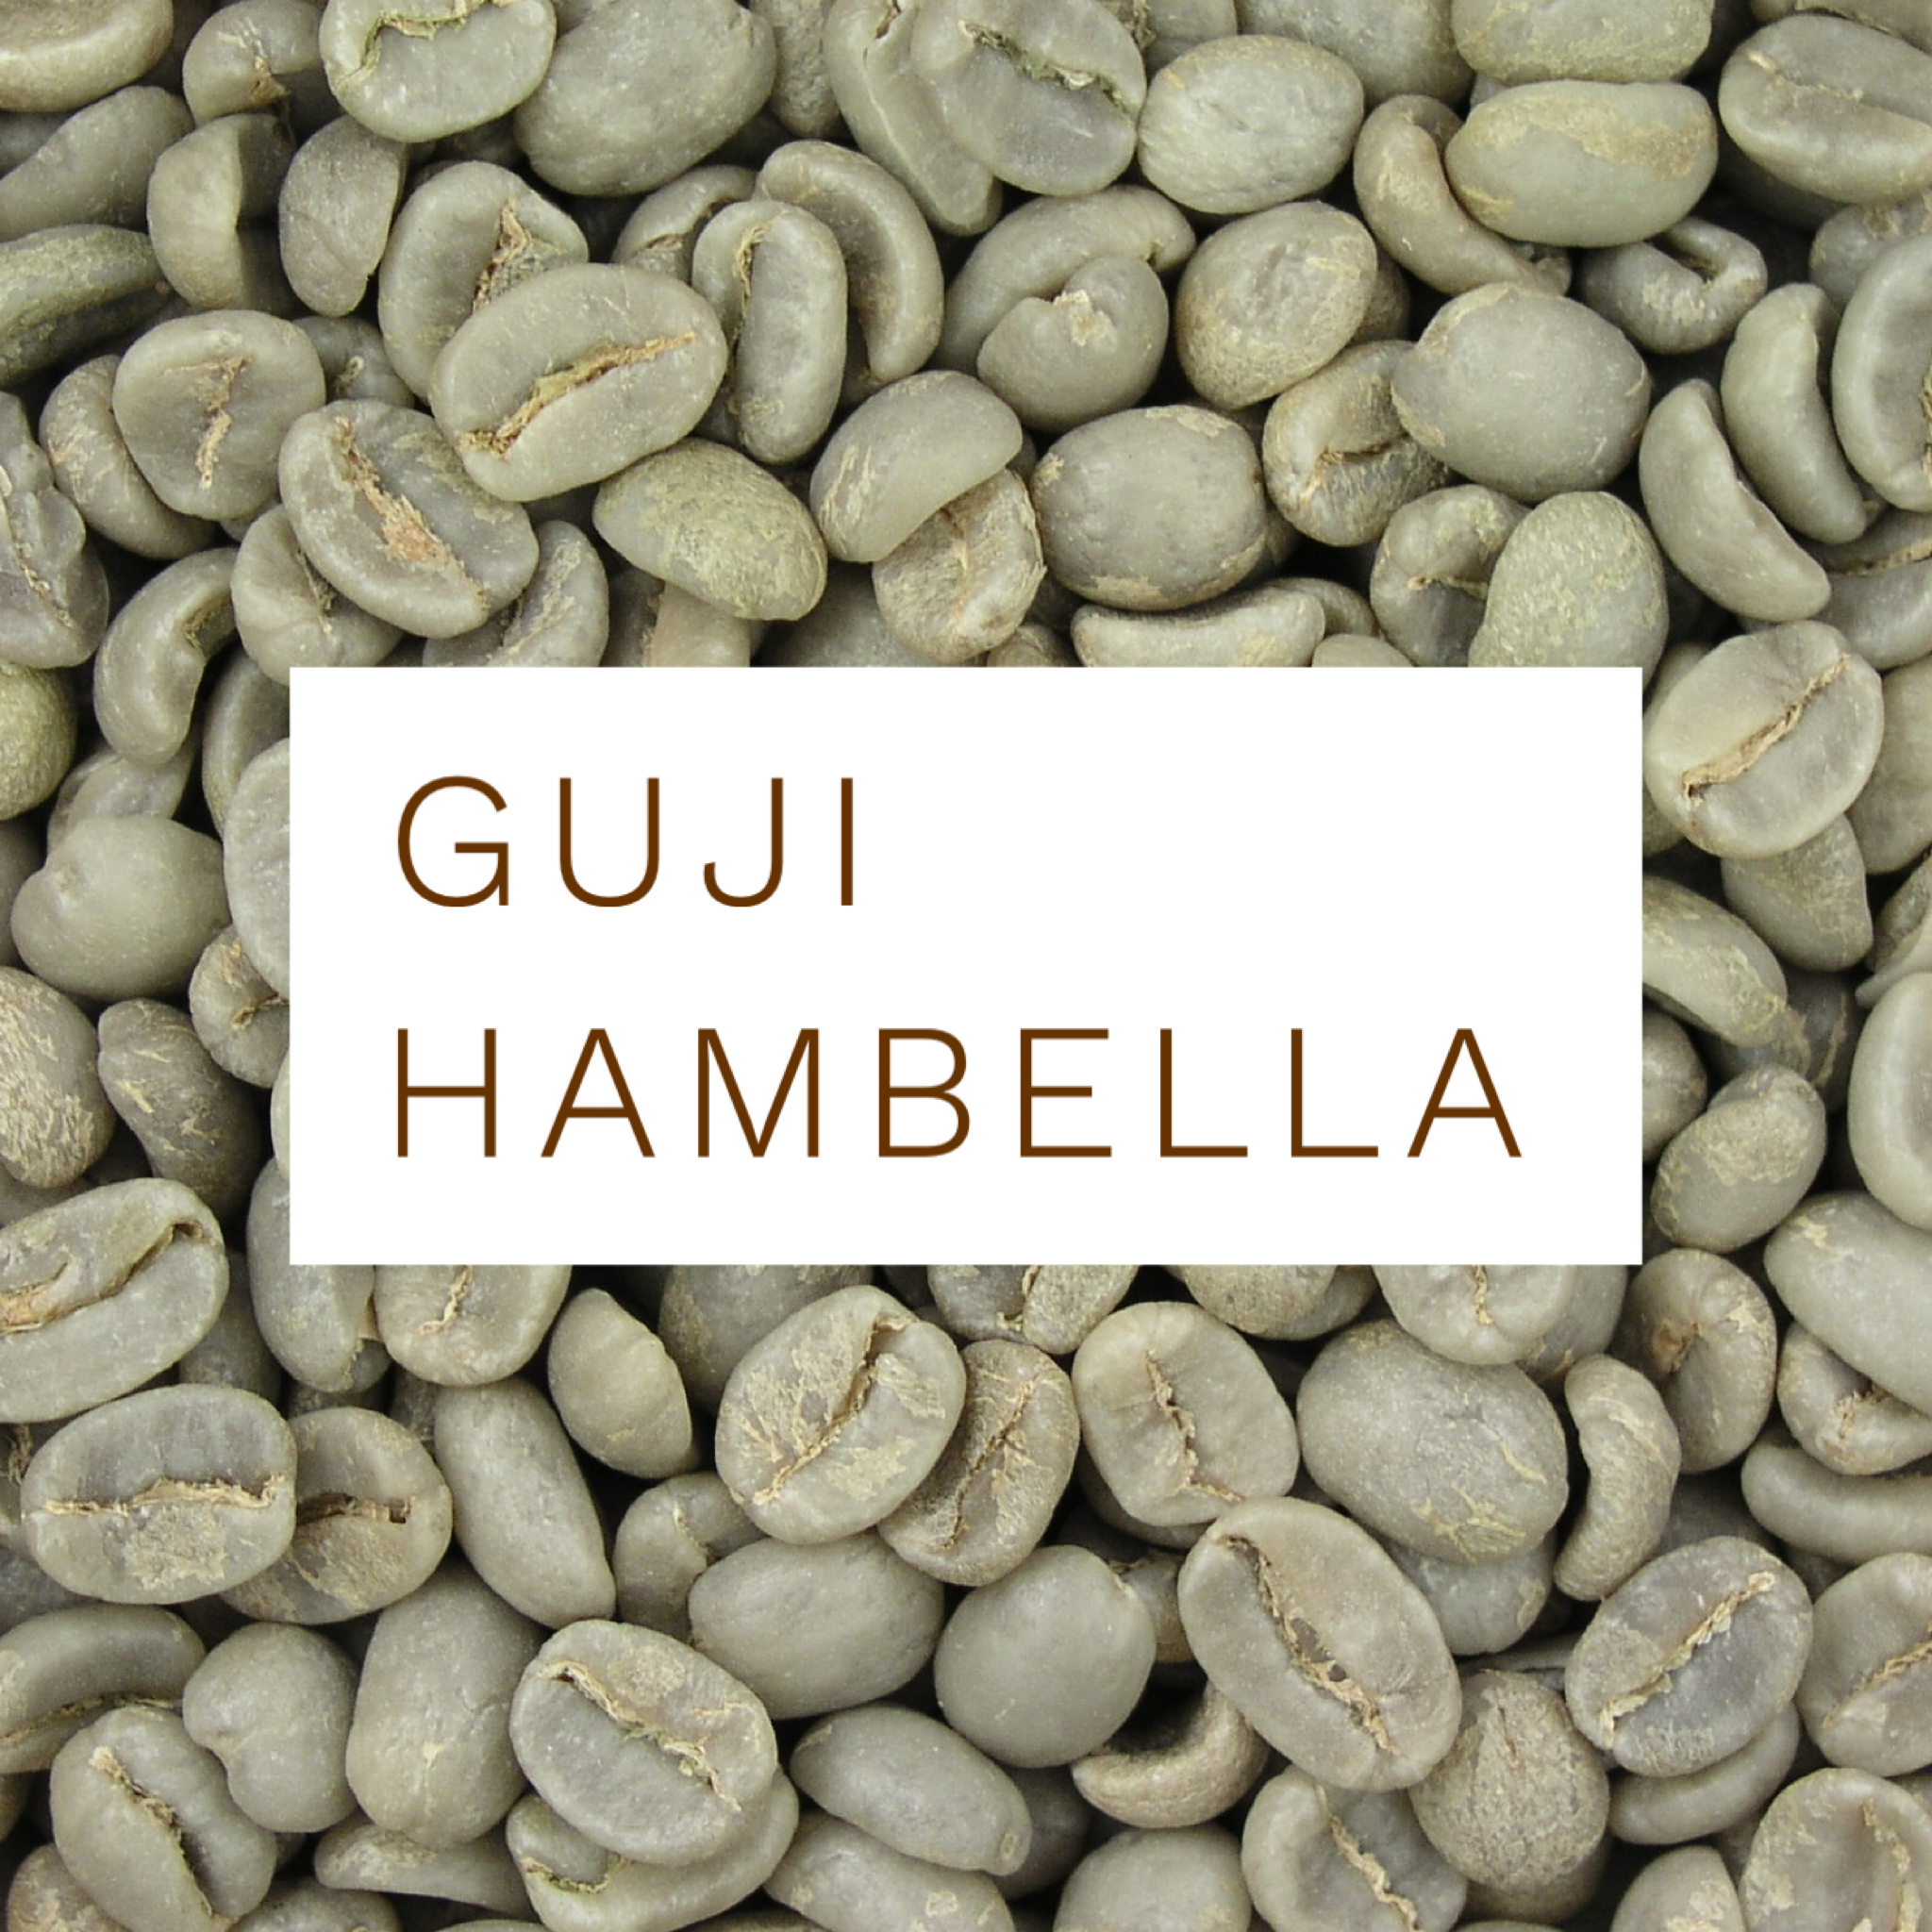 Guji Hambella - raw green beans